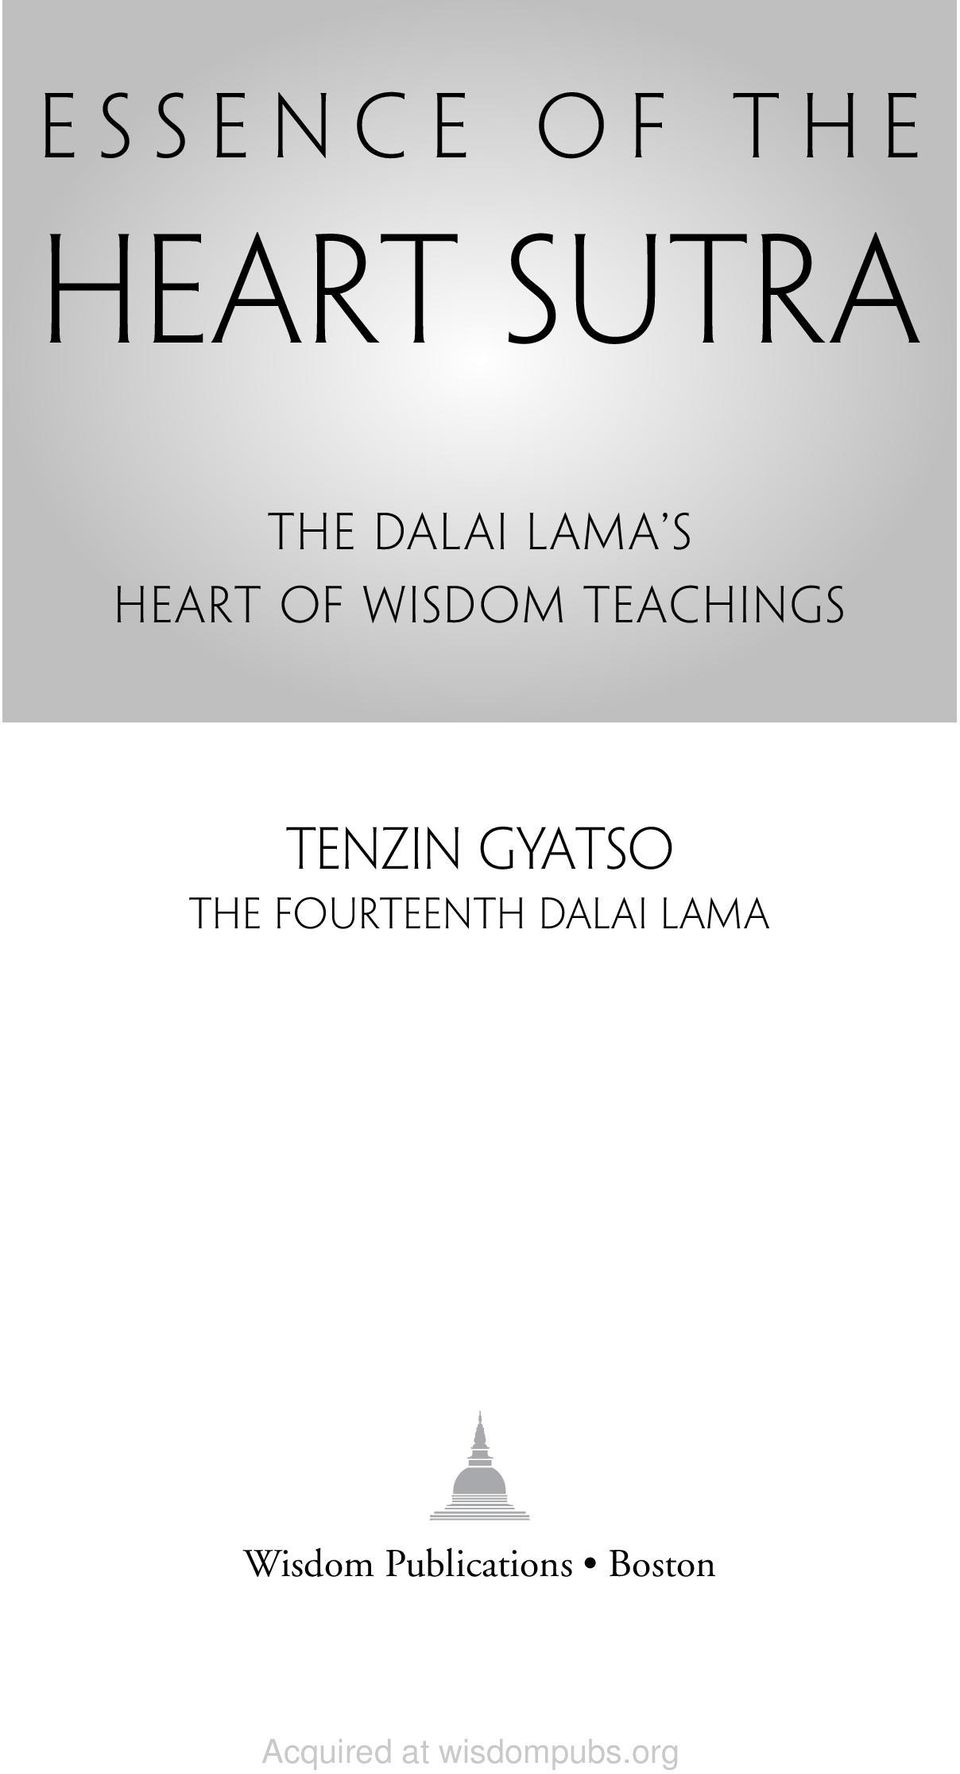 Teachings Tenzin Gyatso the